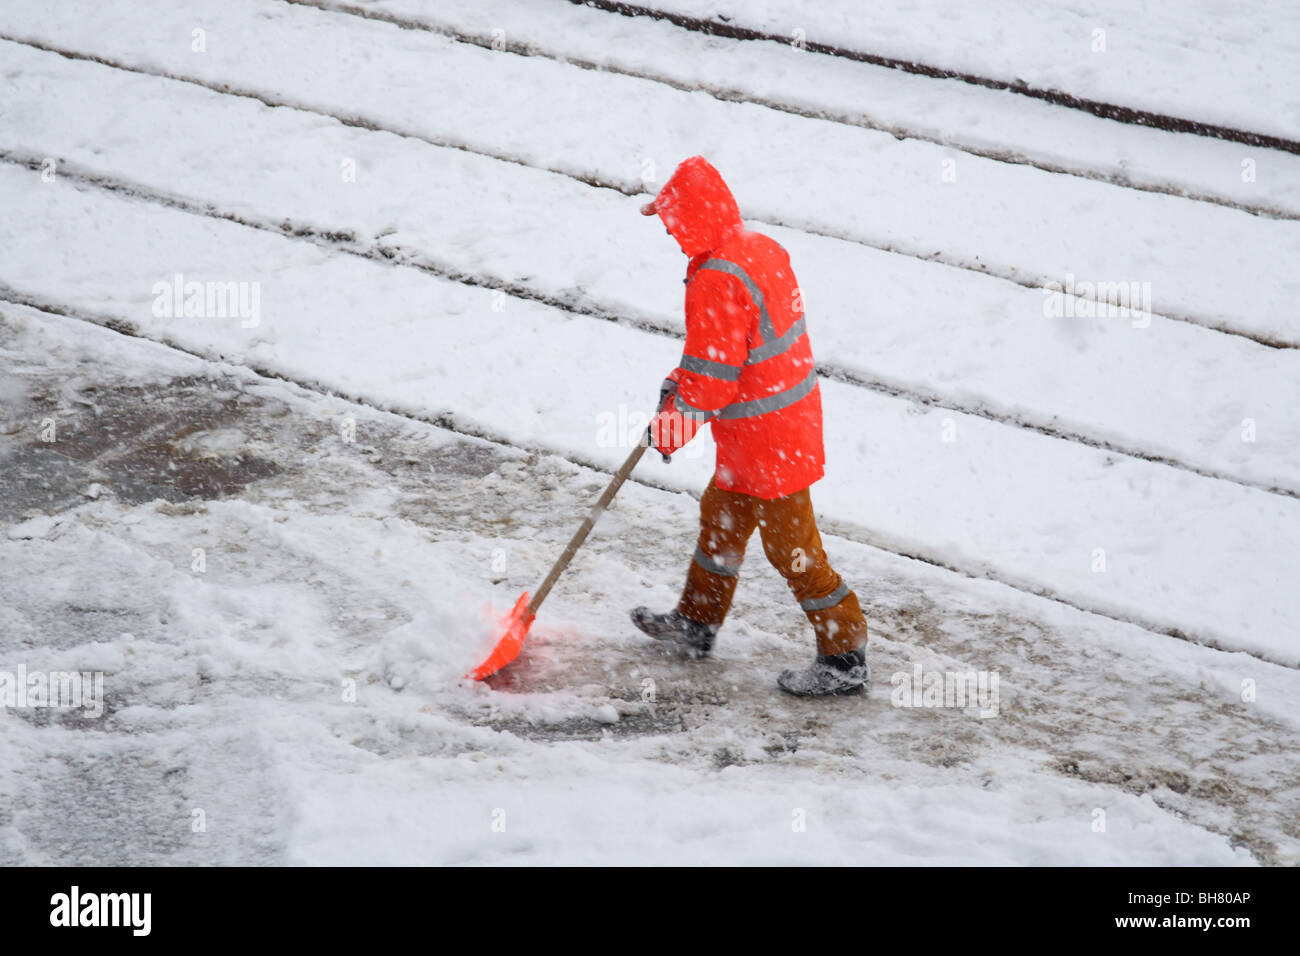 A man shoveling snow during heavy snowfall Stock Photo